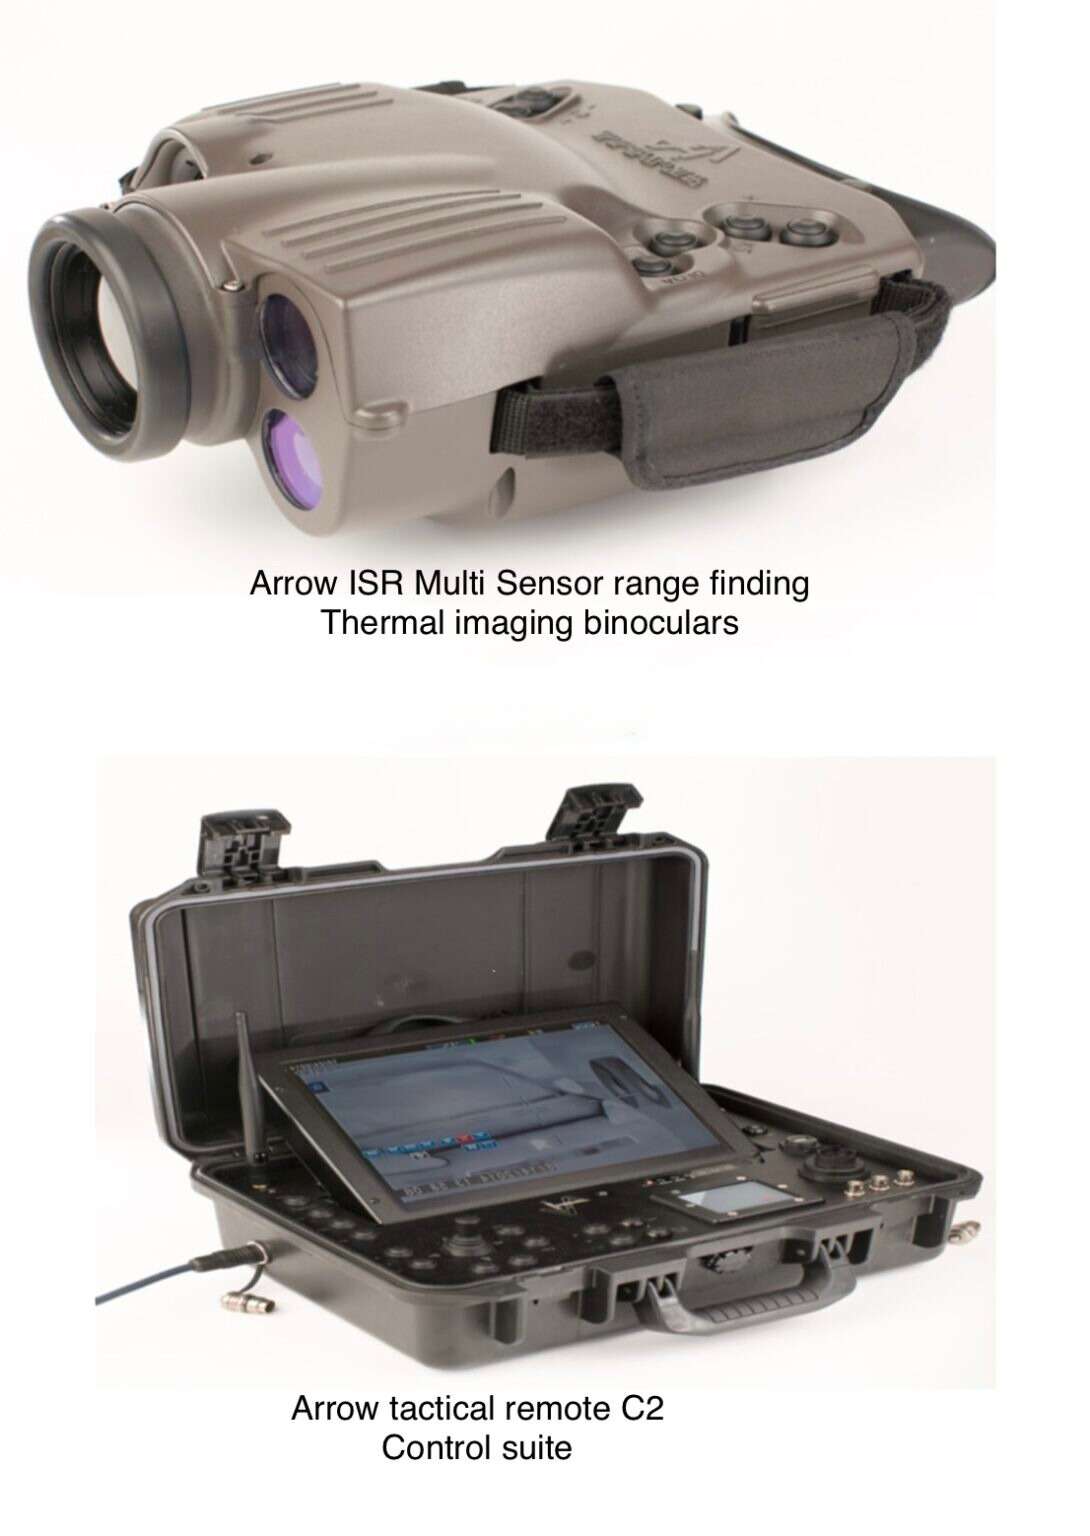 Thermal binoculars with multi-sensor